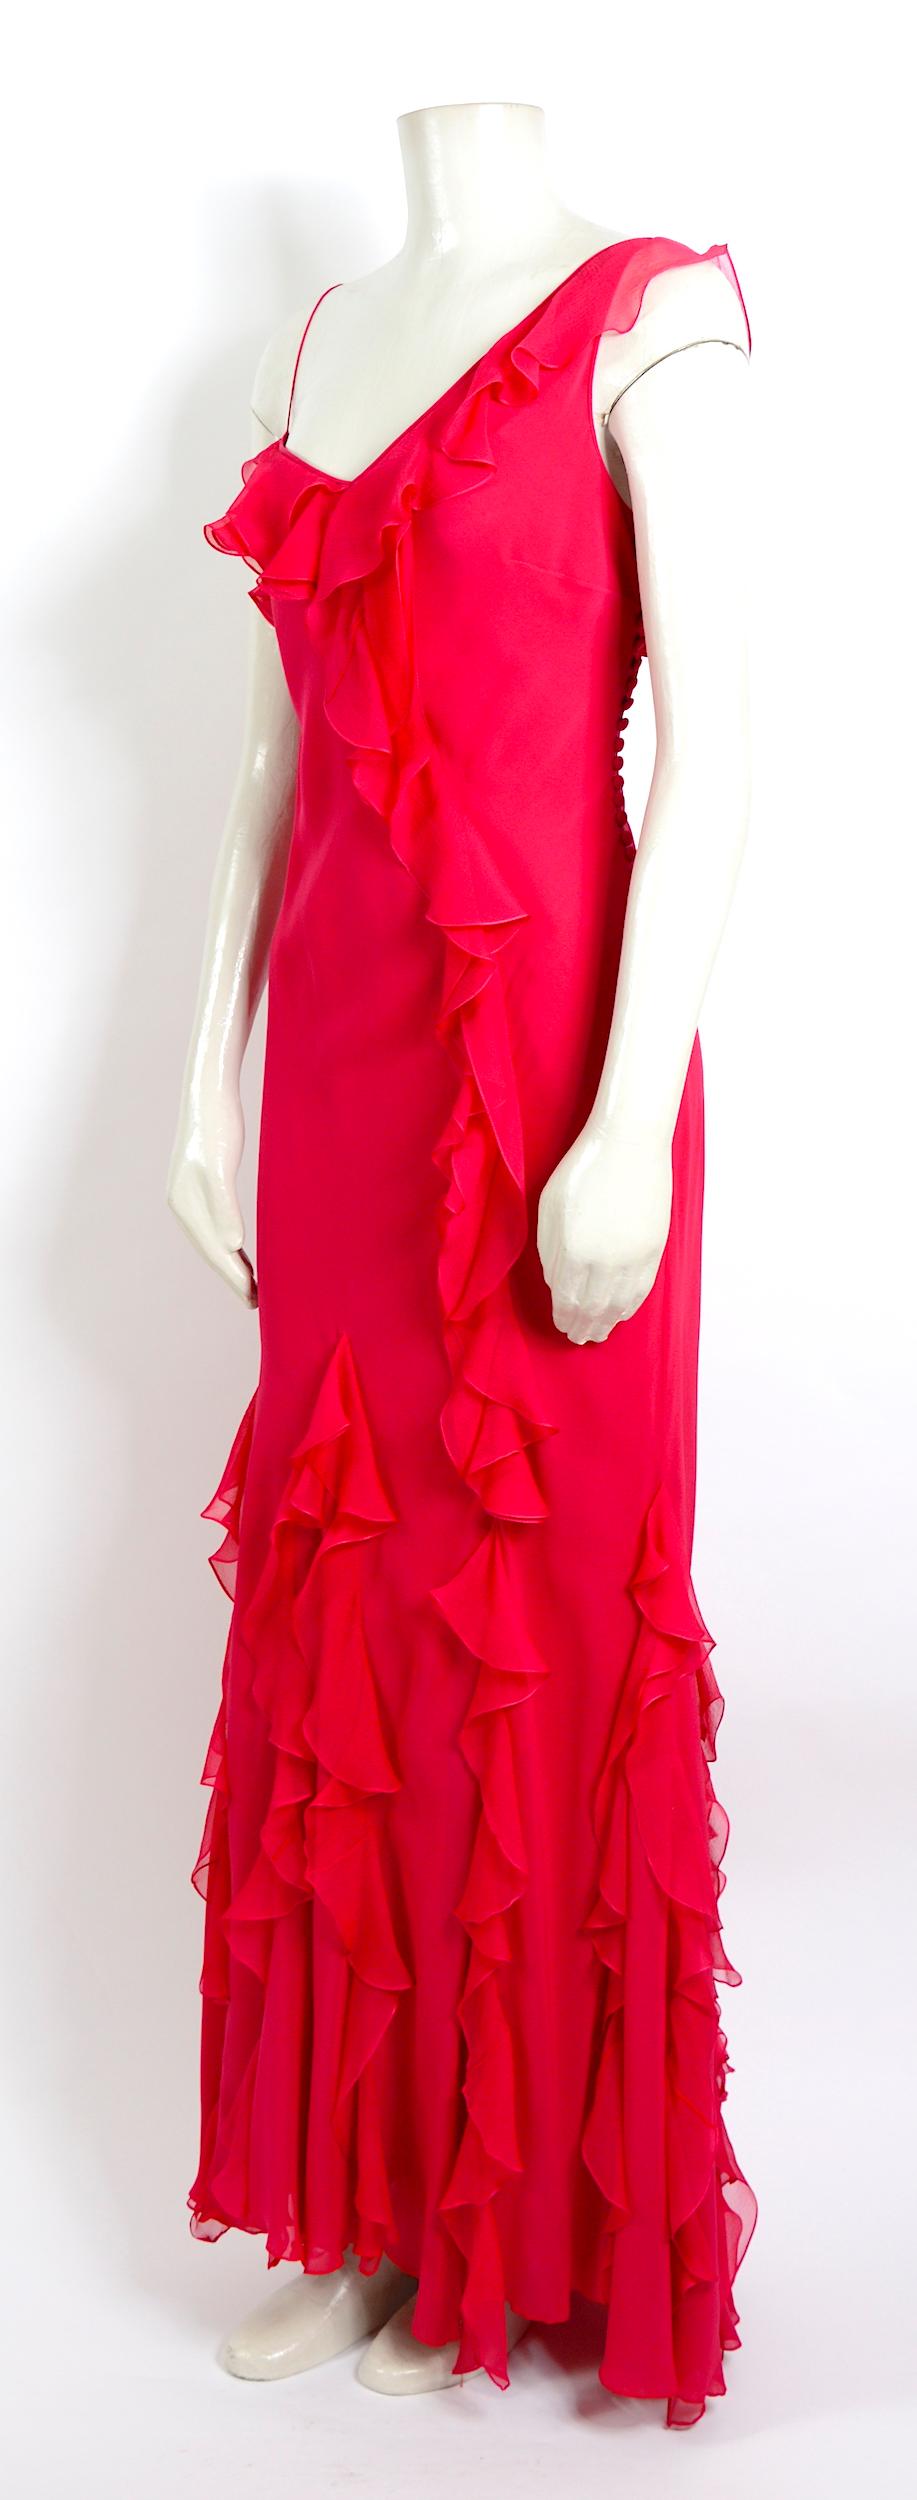 katniss red dress